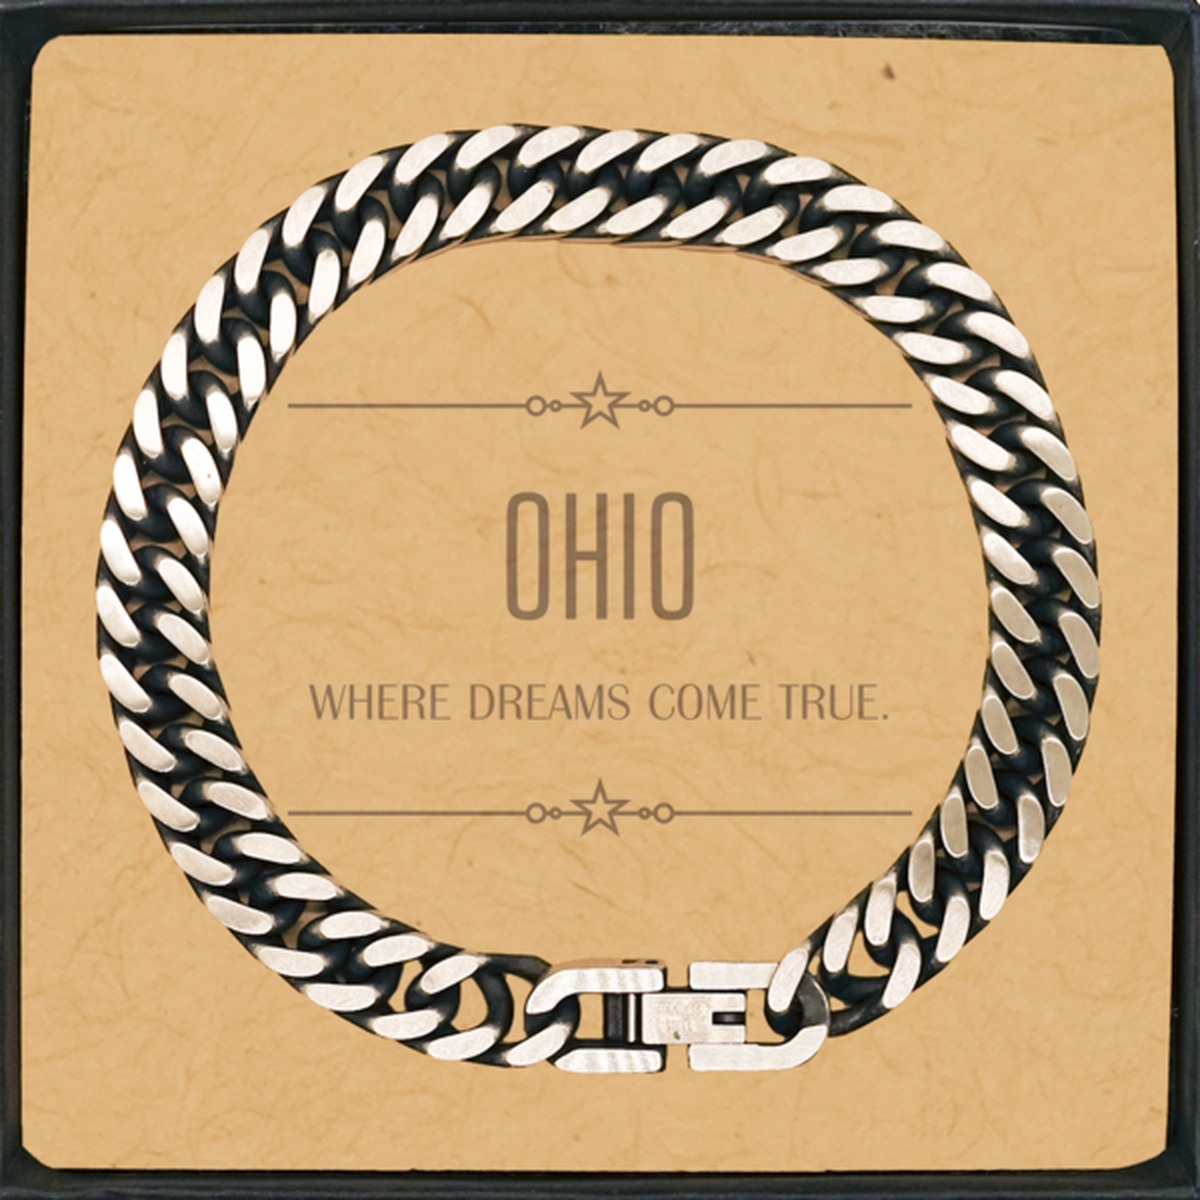 Love Ohio State Cuban Link Chain Bracelet, Ohio Where dreams come true, Birthday Inspirational Gifts For Ohio Men, Women, Friends